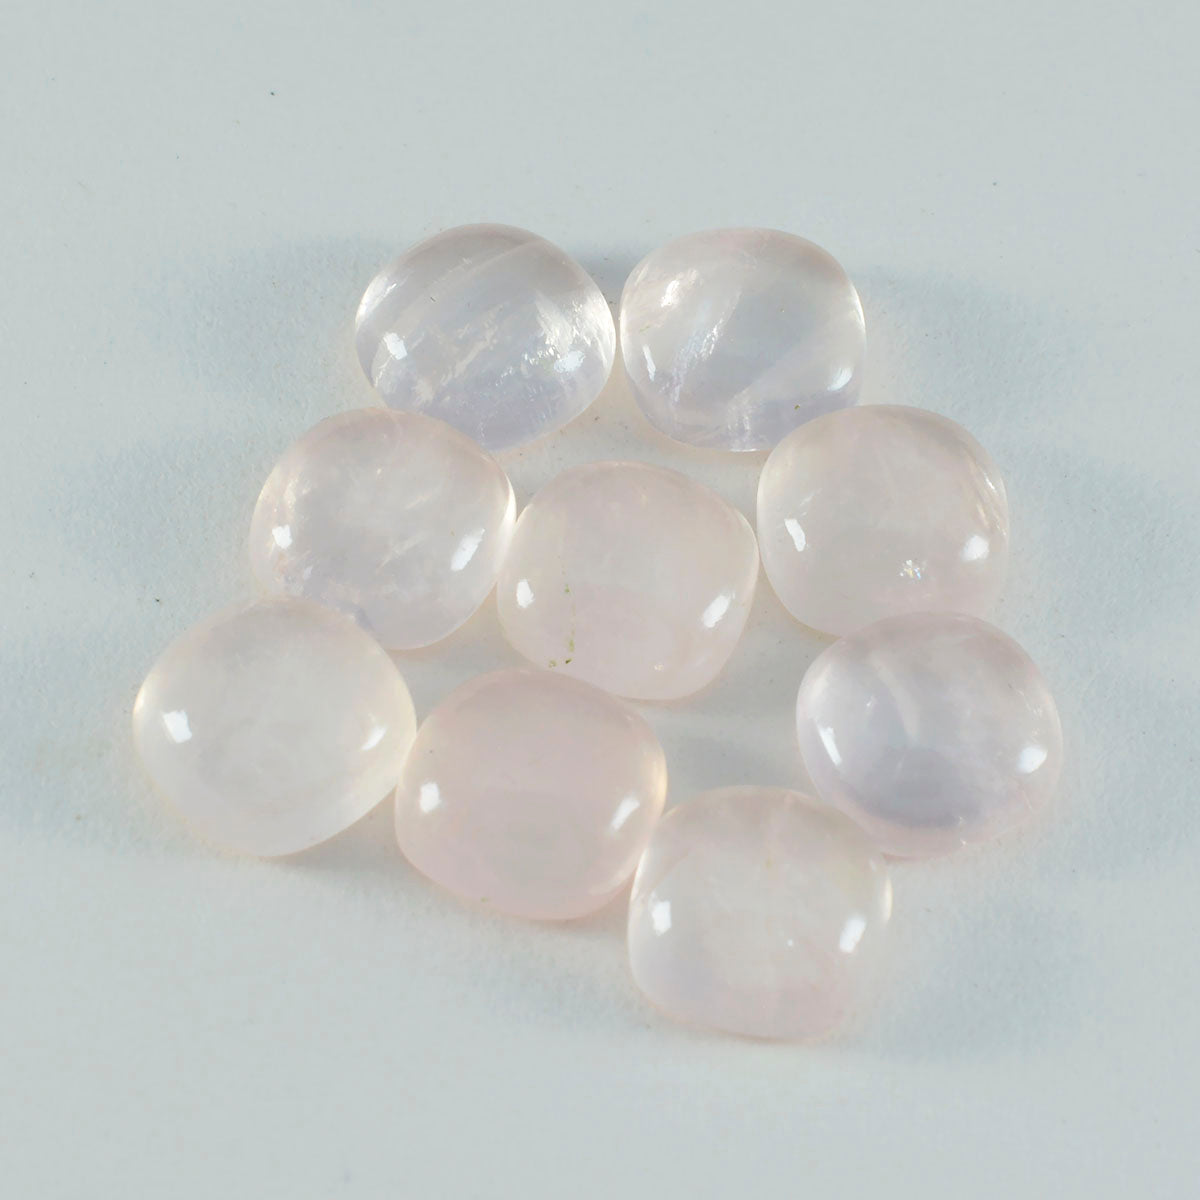 Riyogems 1PC Pink Rose Quartz Cabochon 14x14 mm Cushion Shape good-looking Quality Stone